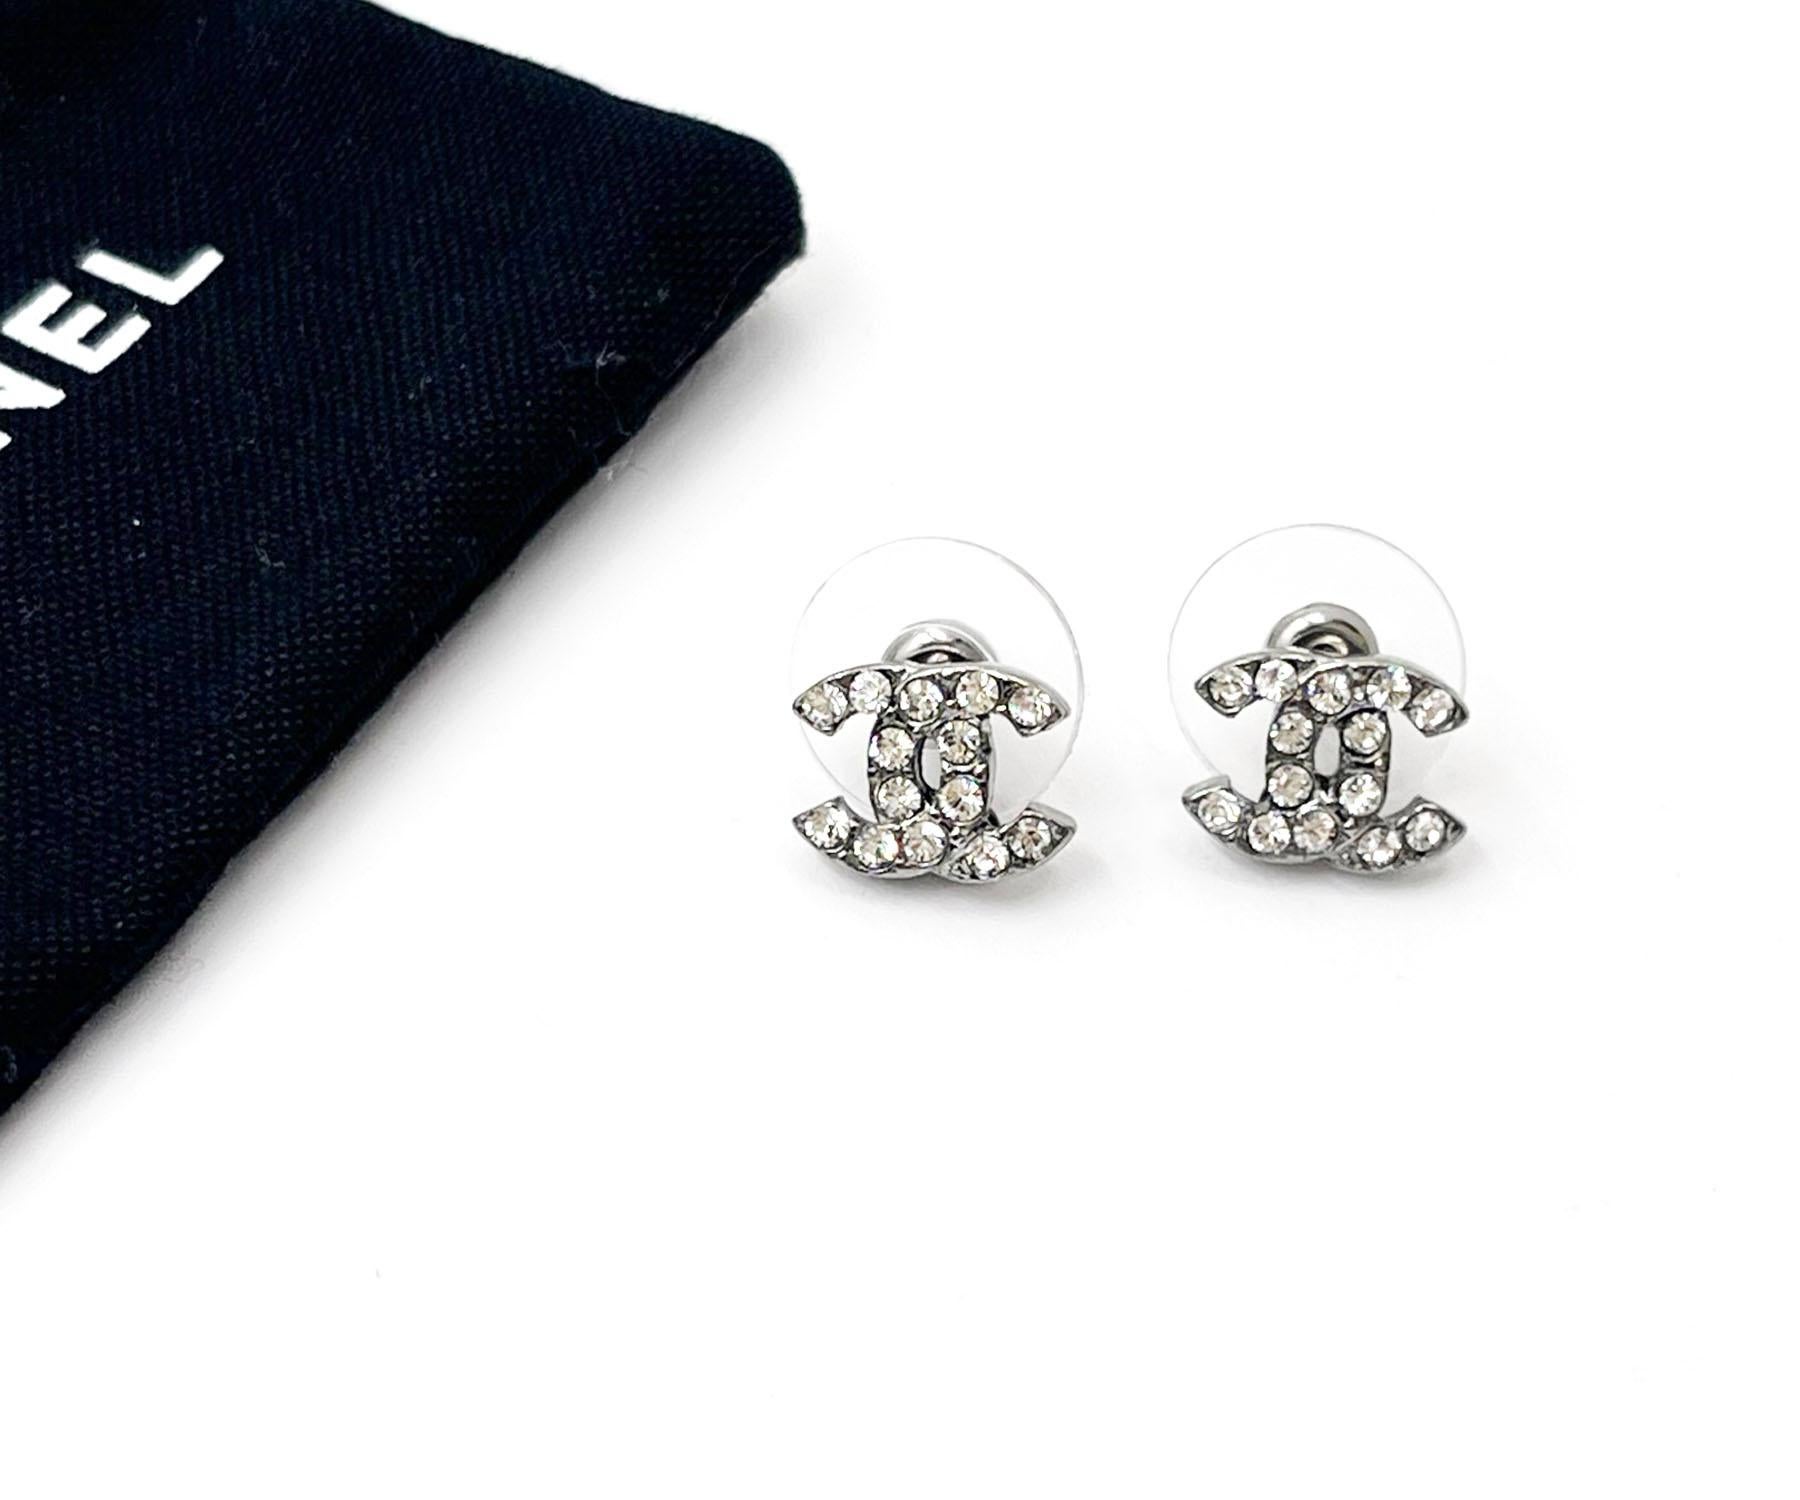 cc crystal earrings